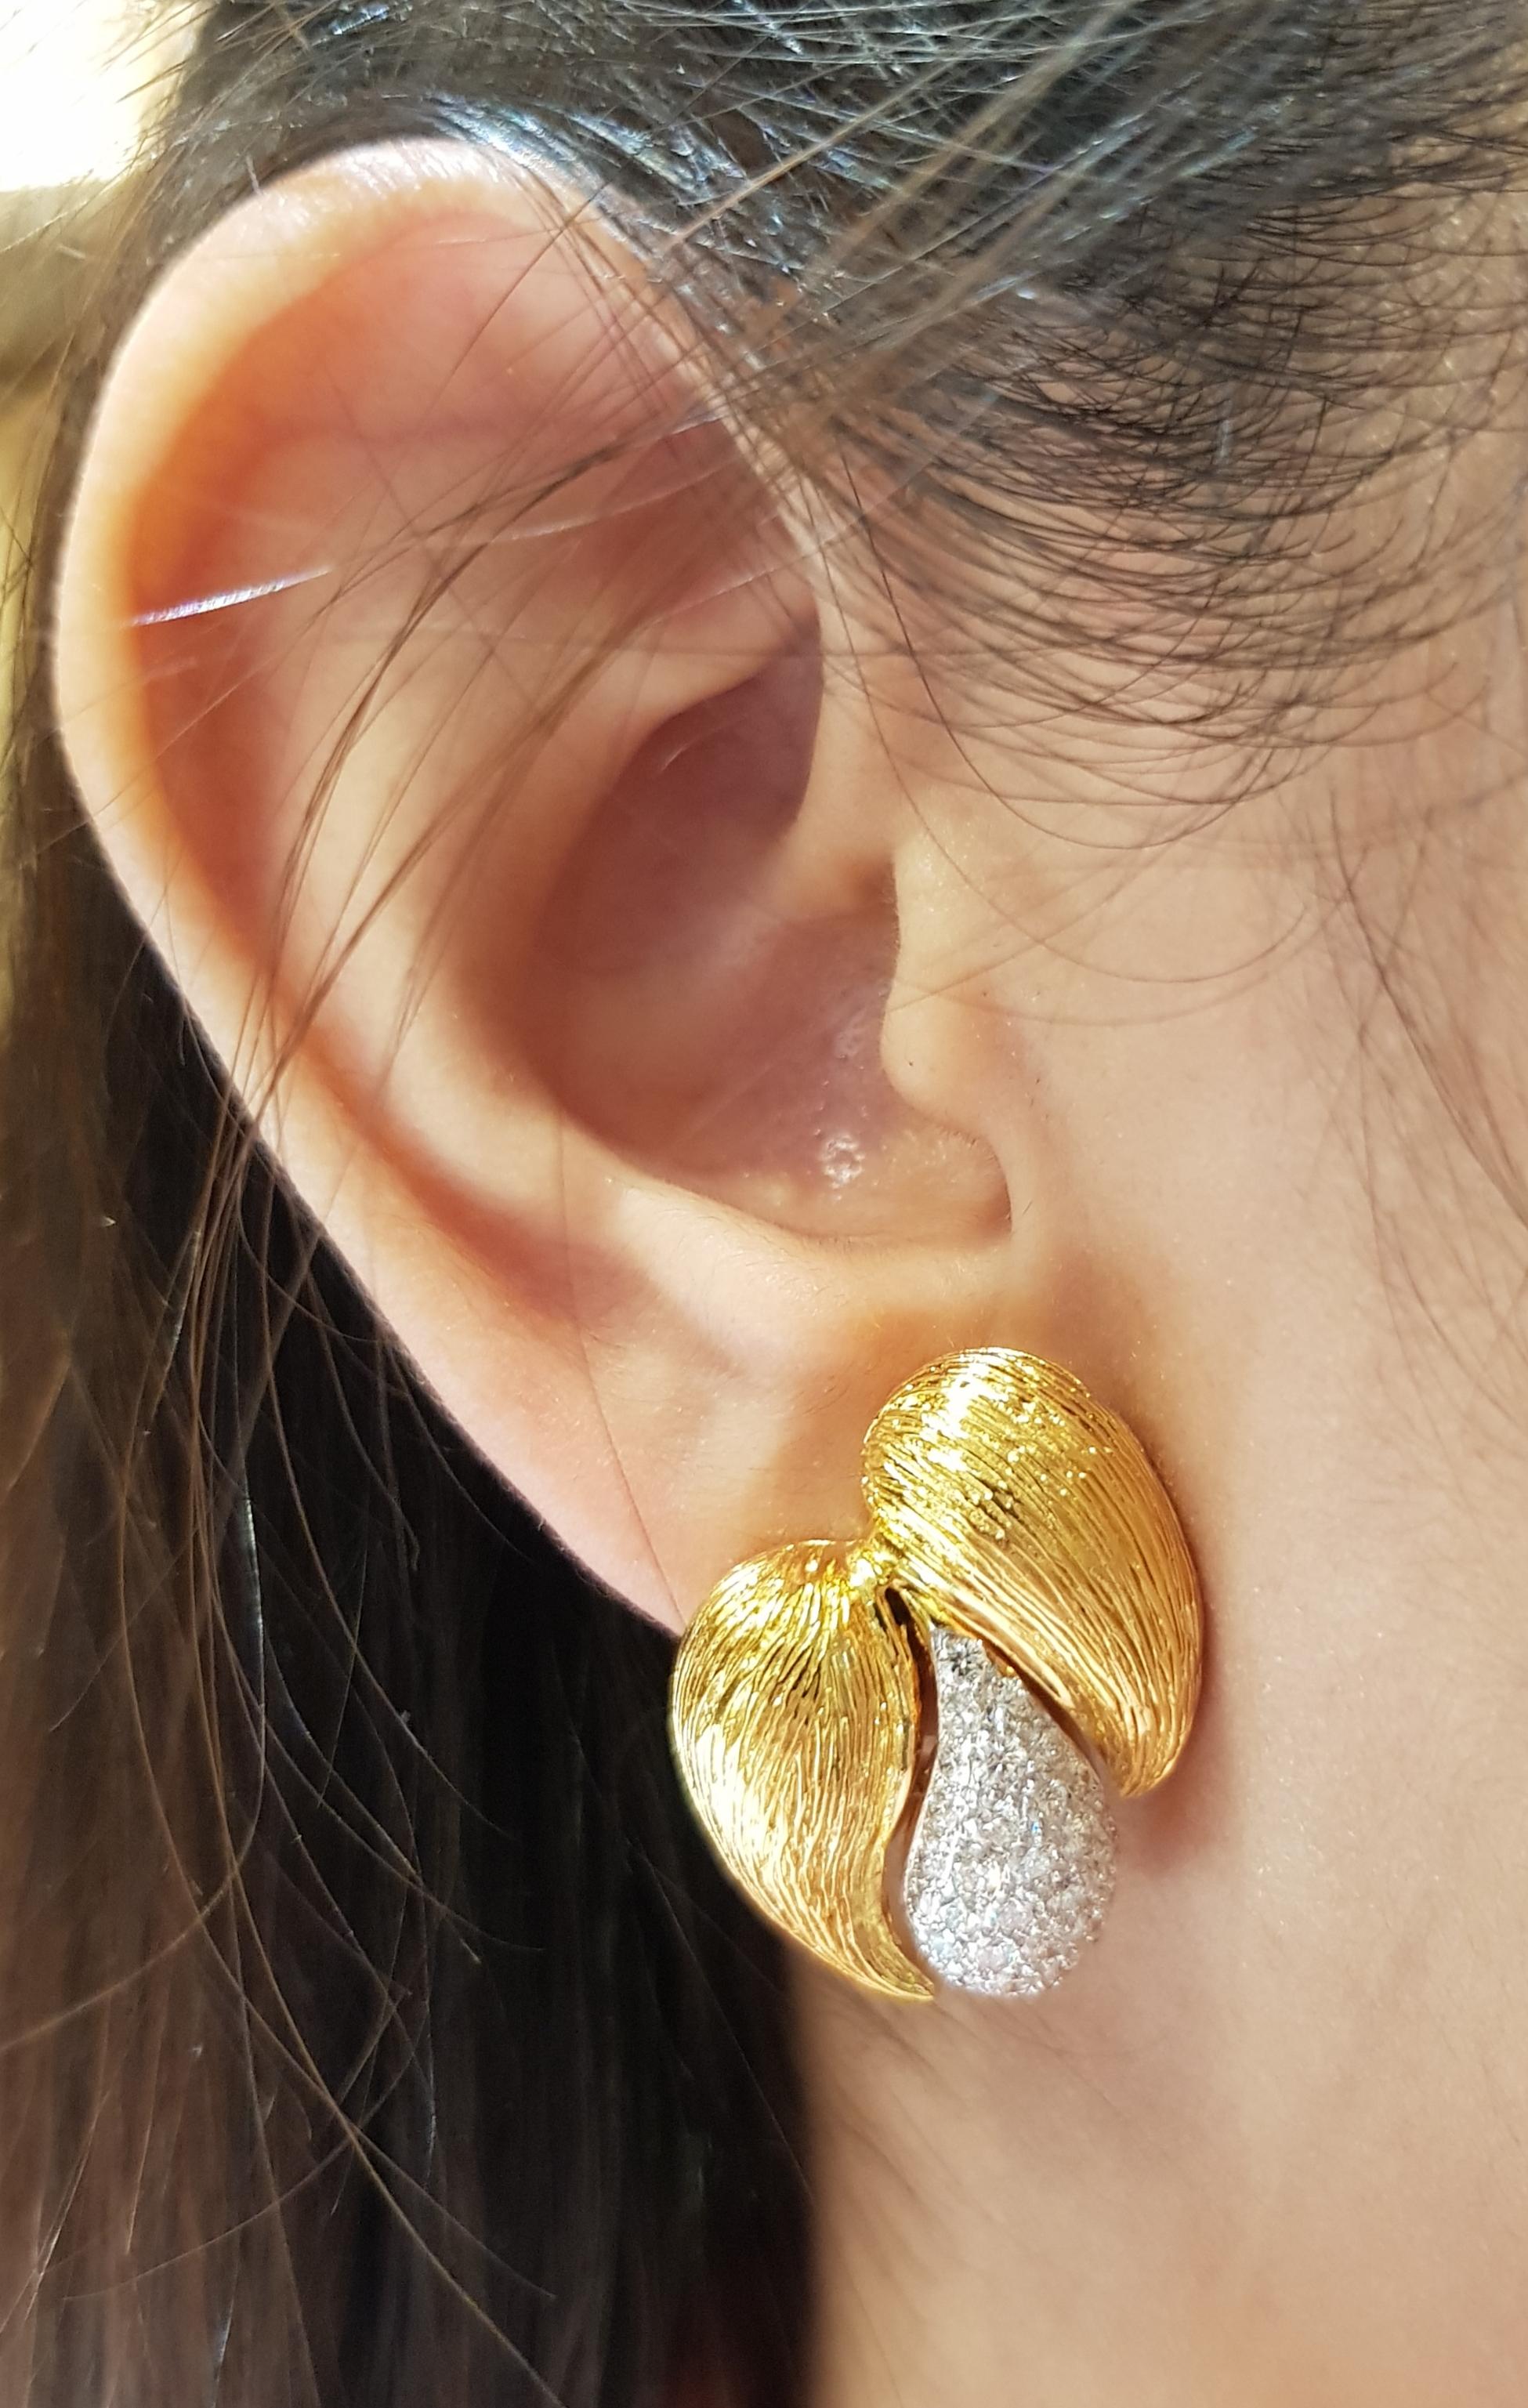 Diamond 2.0 carats Earrings set in 18 Karat Gold Settings

Width:  2.1 cm 
Length:  2.8 cm
Total Weight: 18.57 grams

